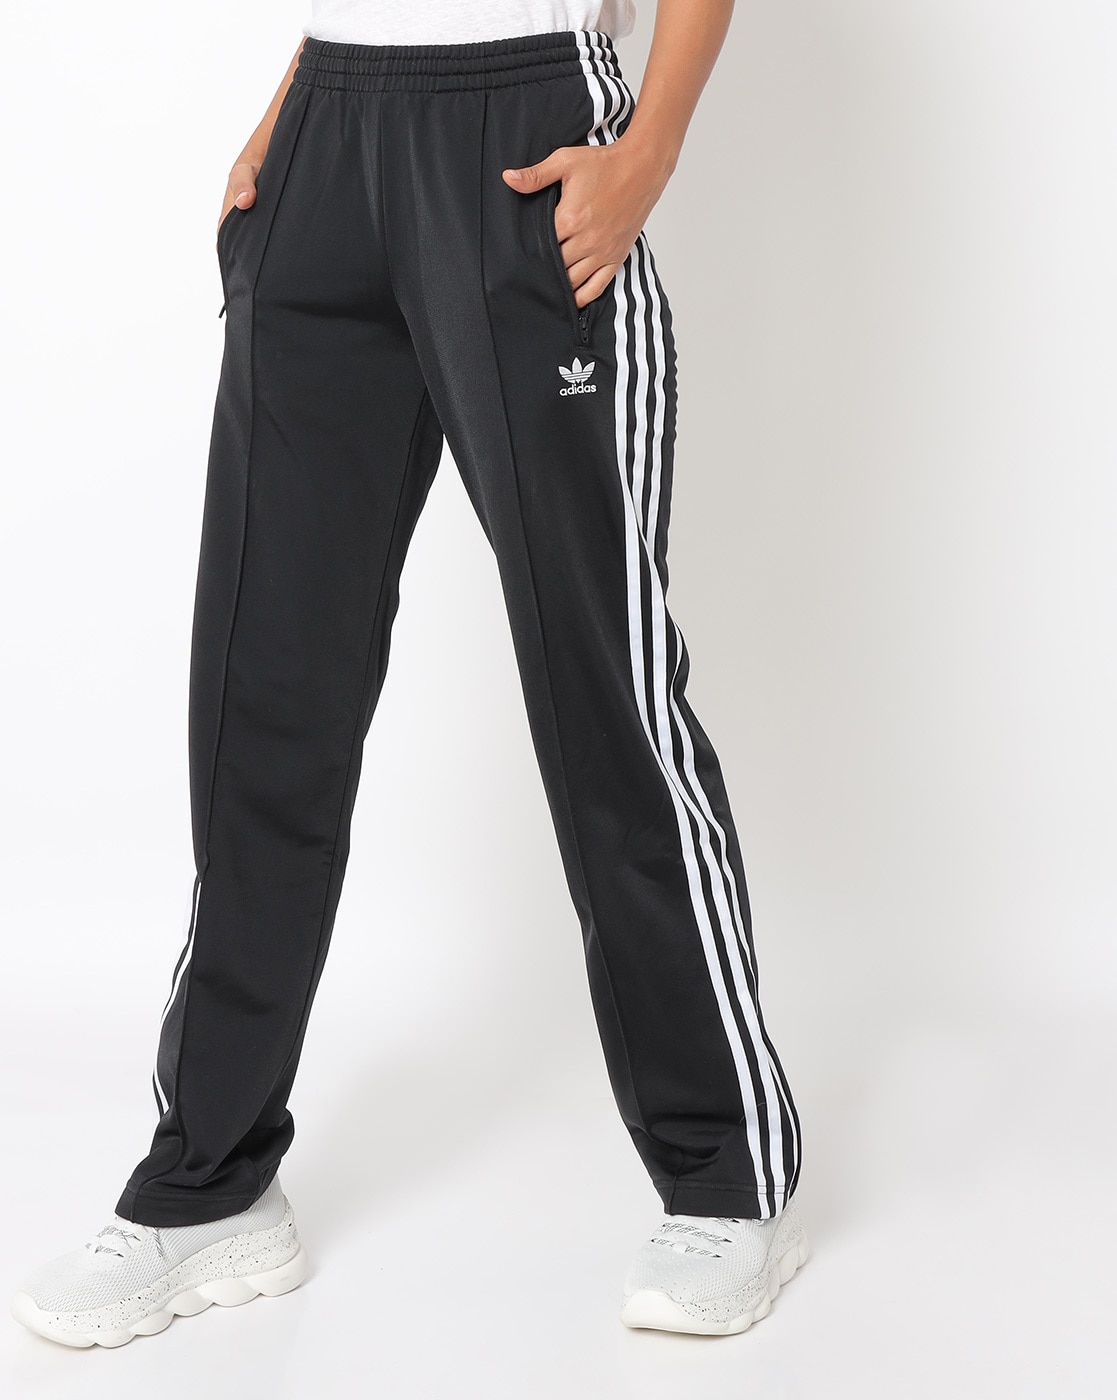 Men's adidas Originals Sticker Fleece Jogger Pants| JD Sports